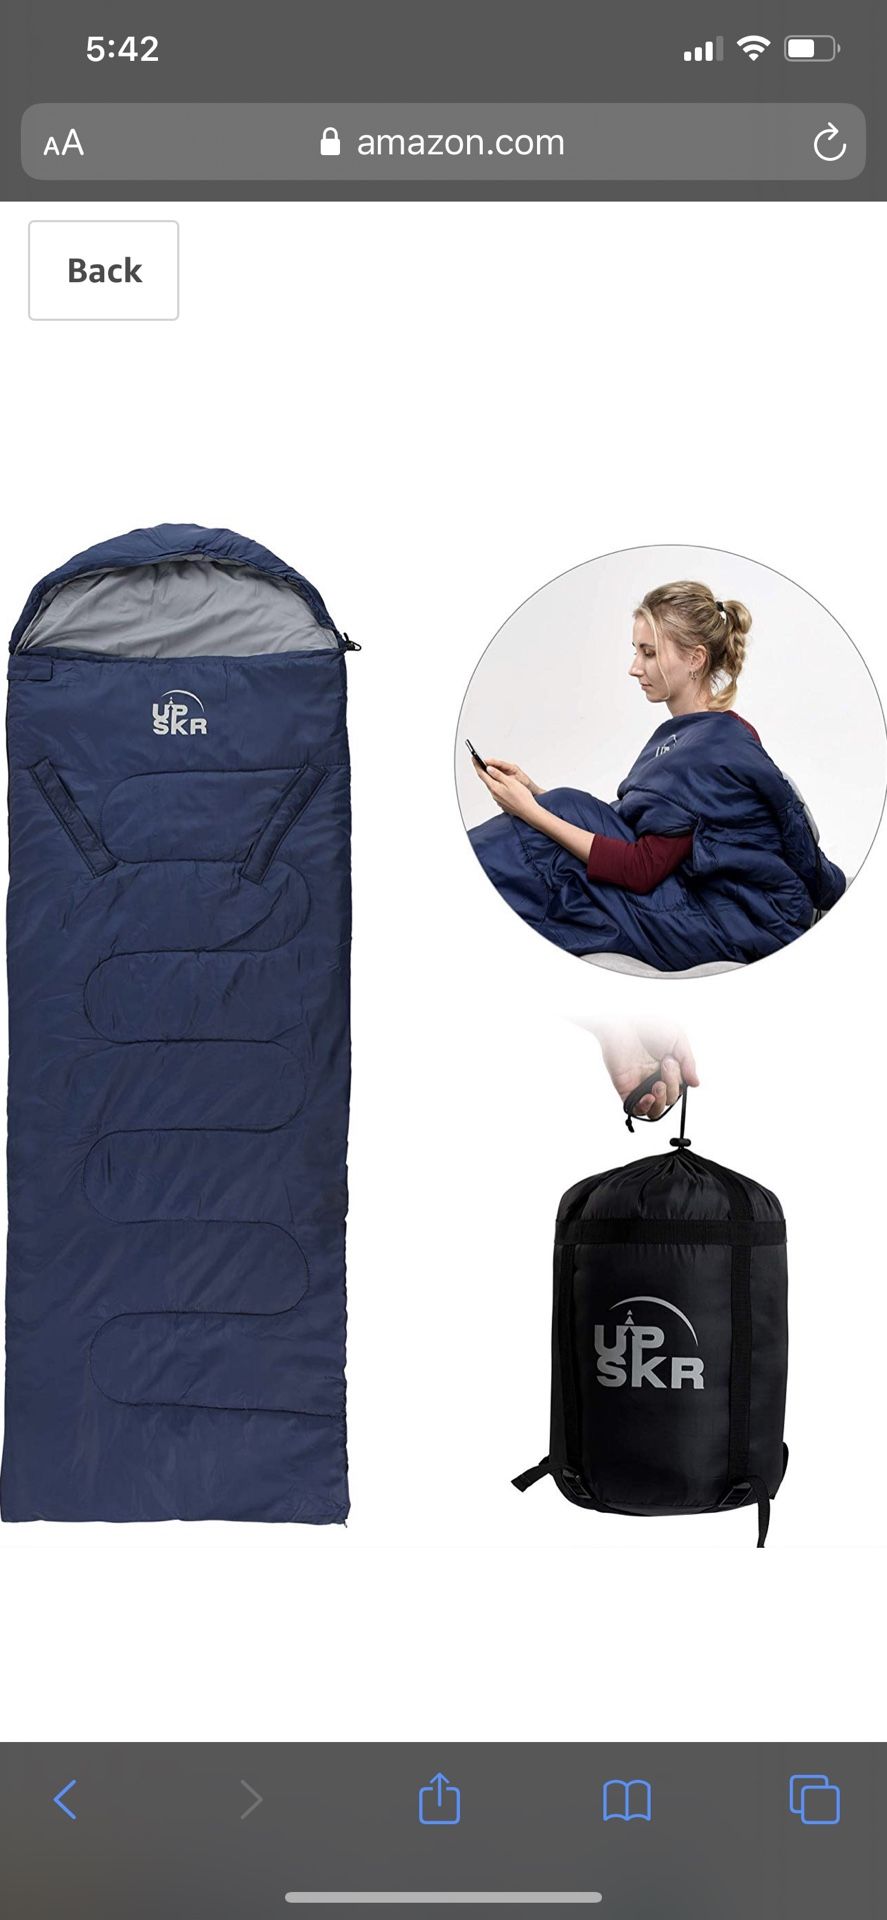 UPSKR Sleeping Bag Lightweight & Waterproof for Adults & Kids Cold Weather, 4 Season Rectangular Sleeping Bags Great for Indoor & Outdoor Use Hiking